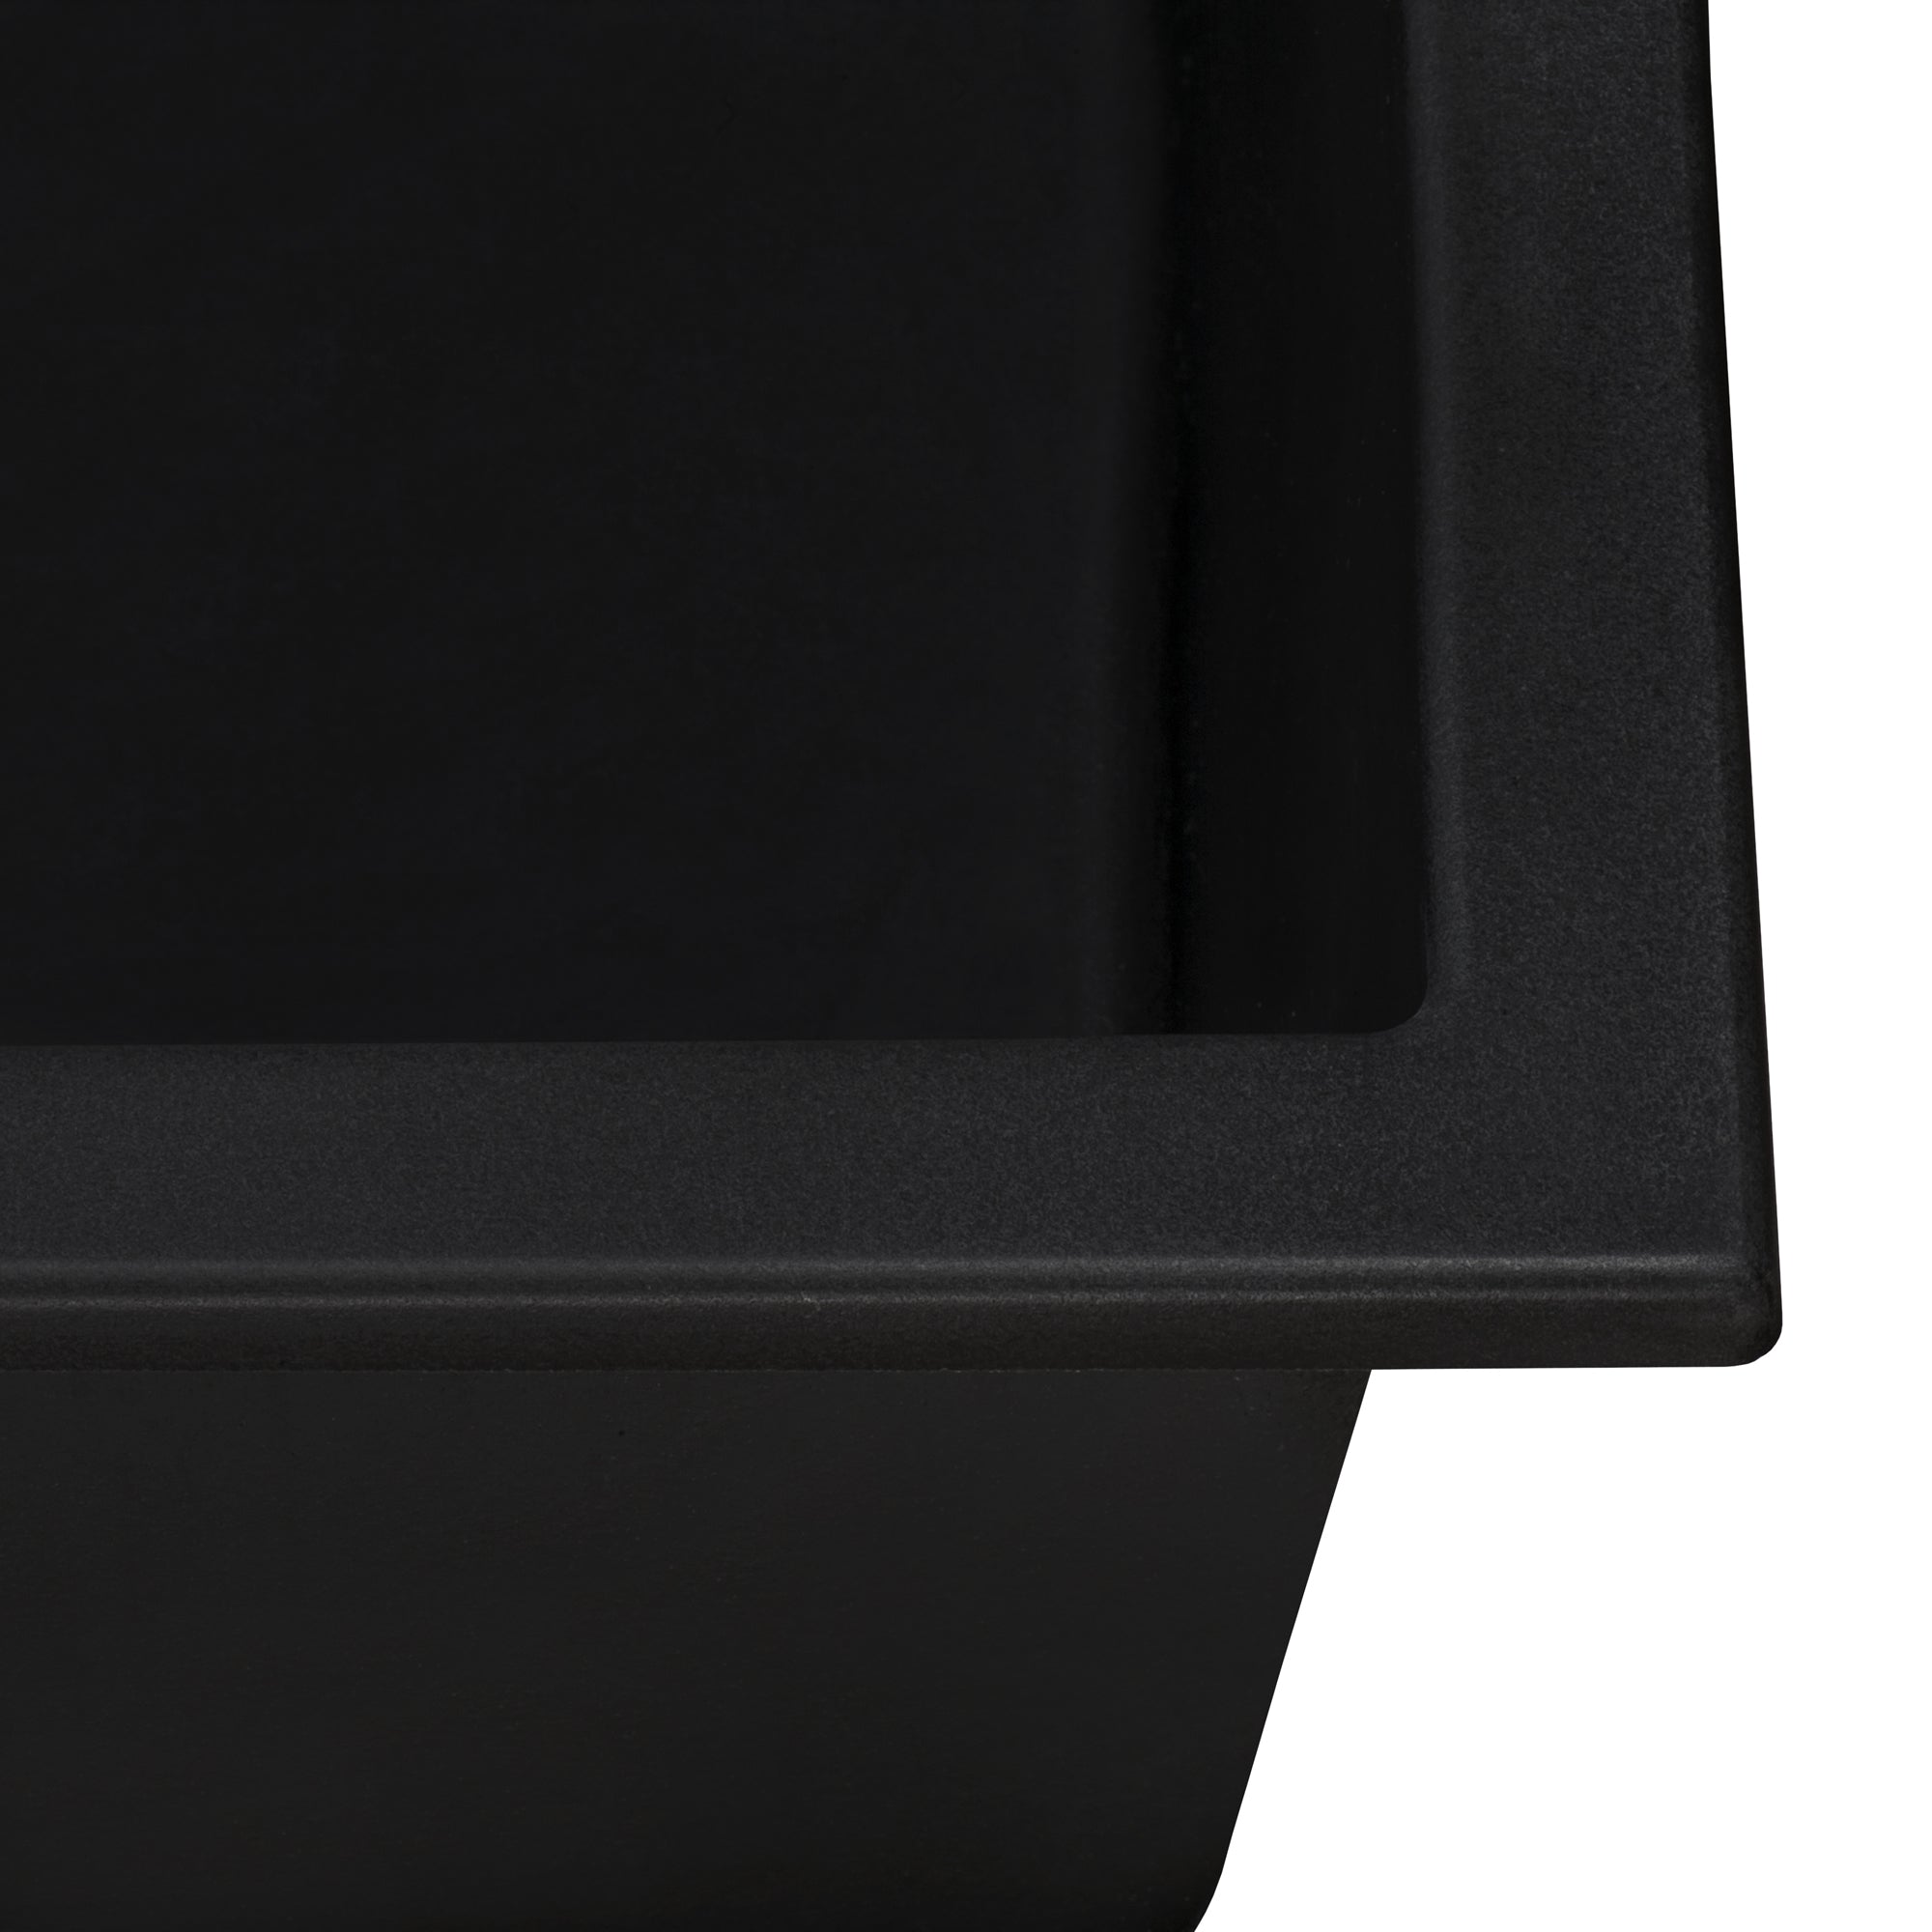 34 x 20 inch epiGranite Dual-Mount Granite Composite Double Bowl Kitchen Sink – Midnight Black